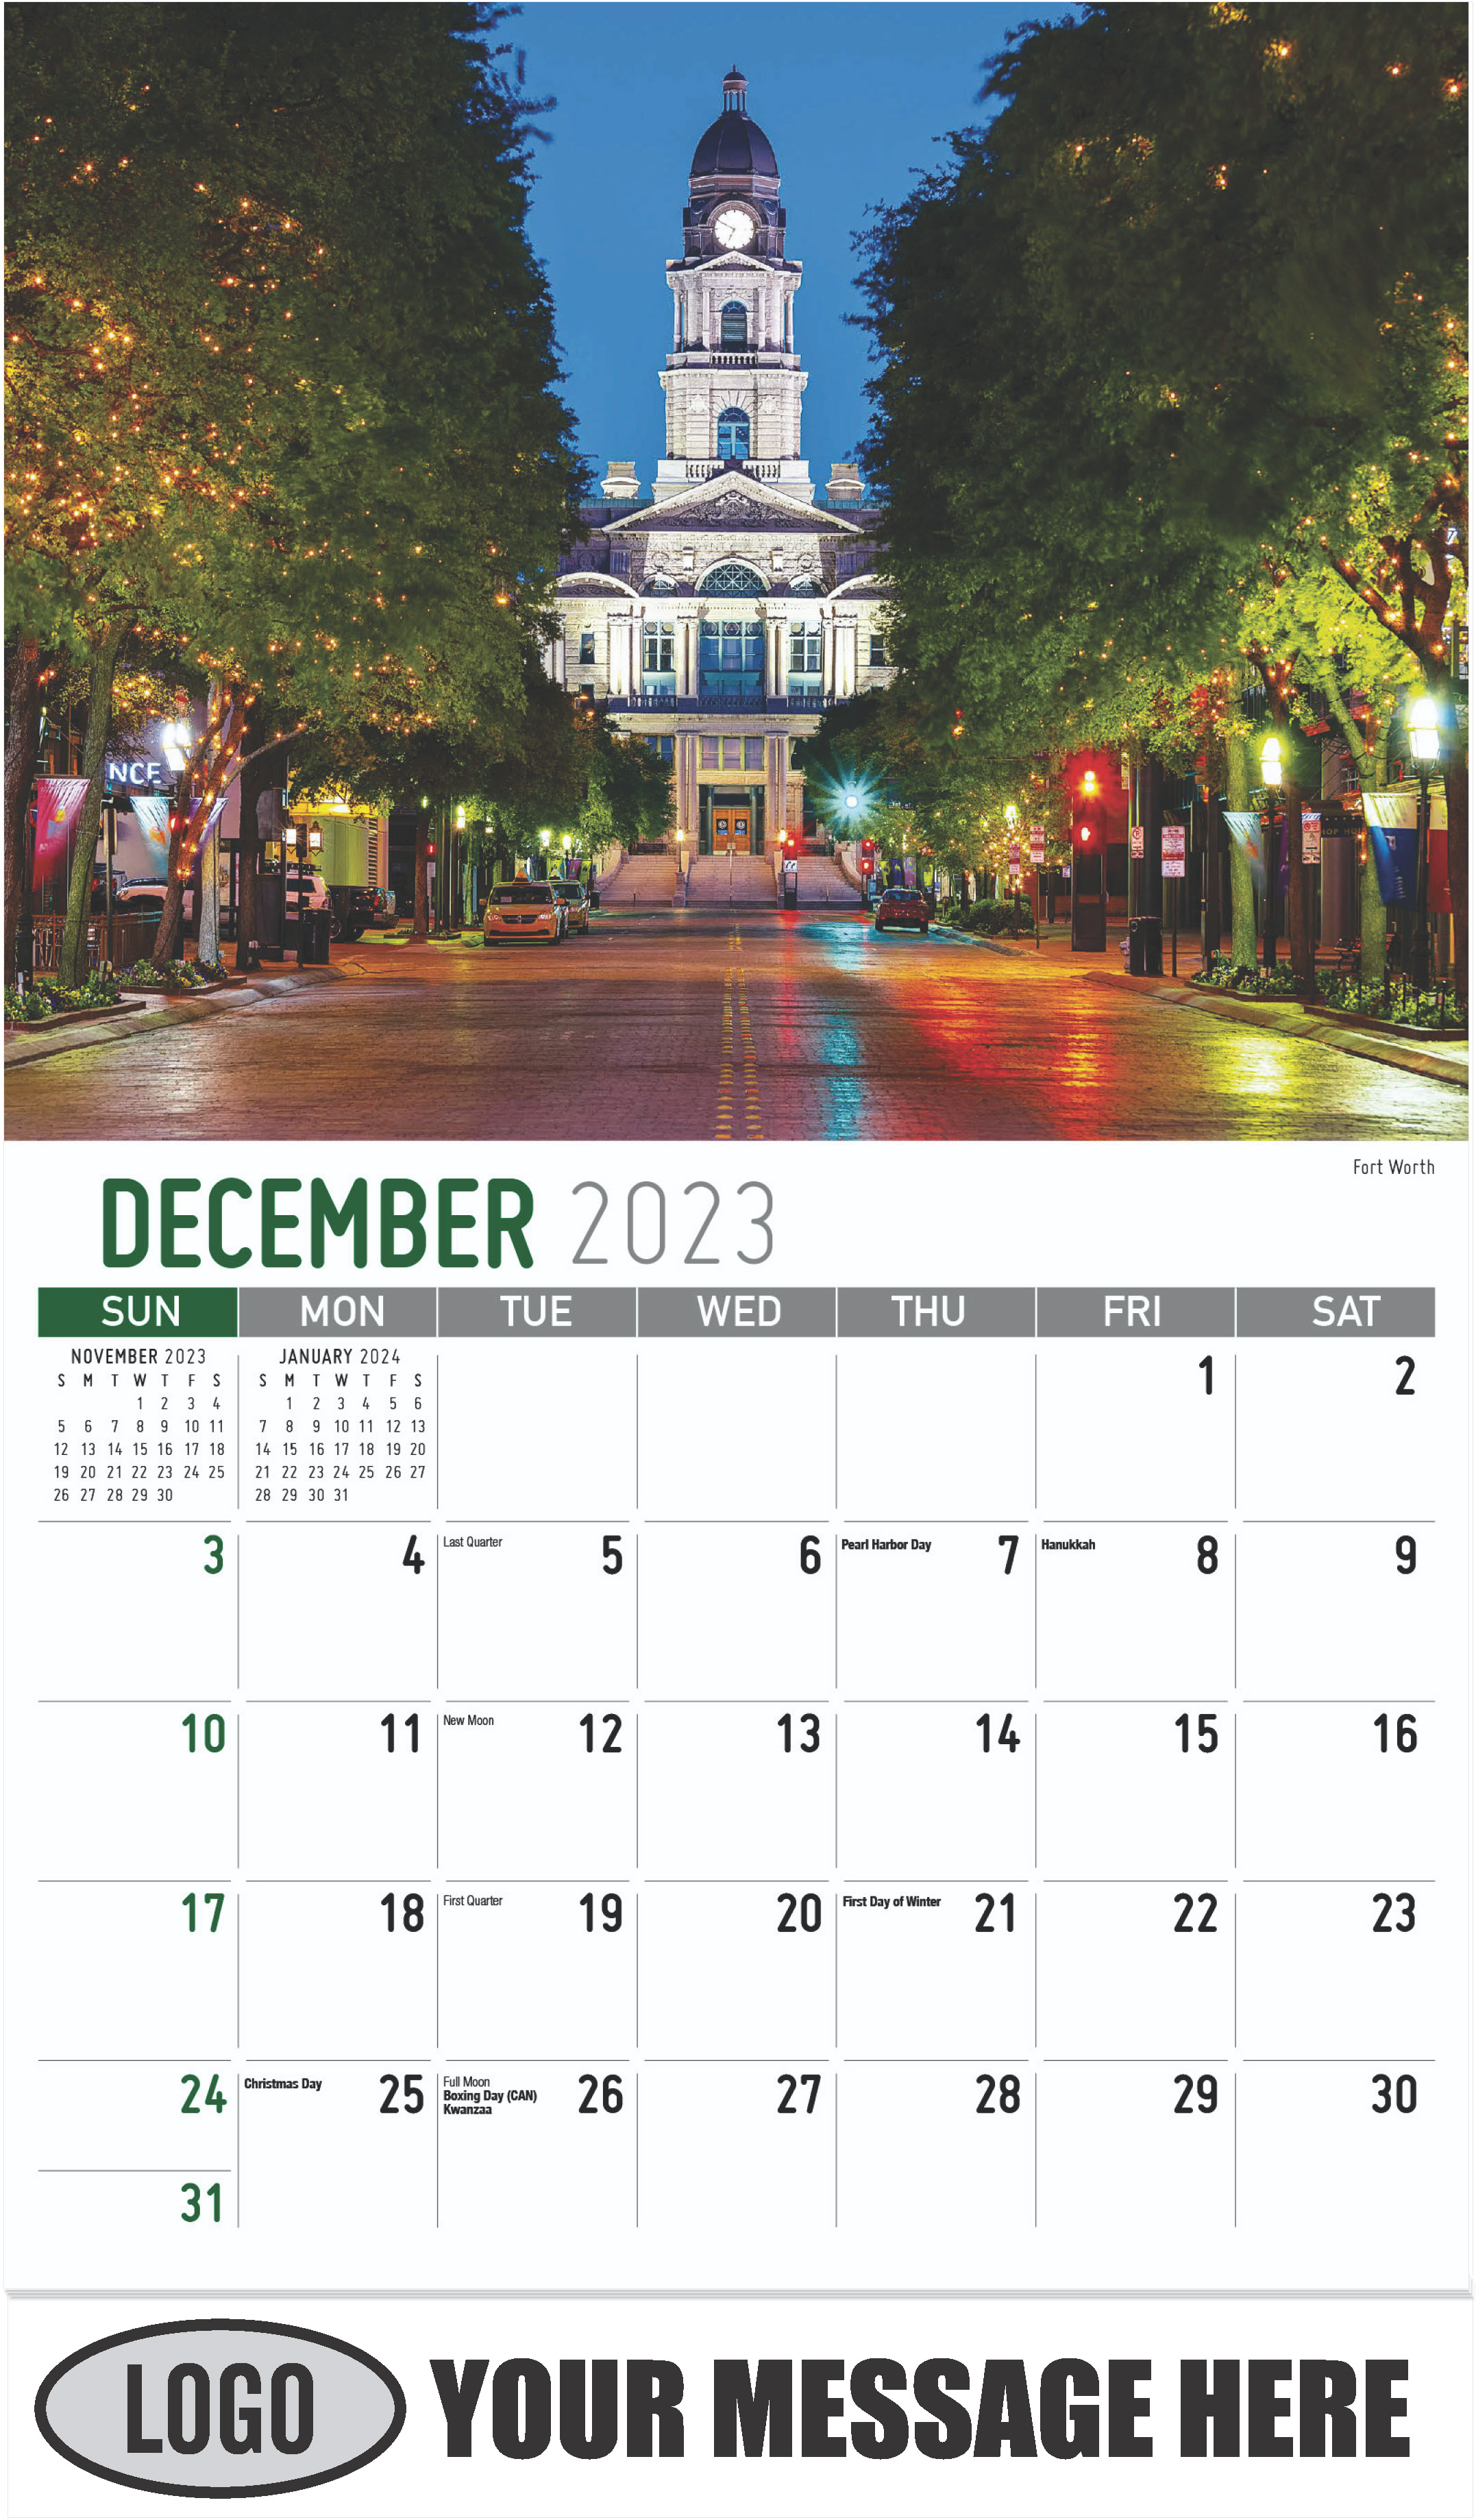 Fort Worth - December 2023 - Scenes of Texas 2023 Promotional Calendar